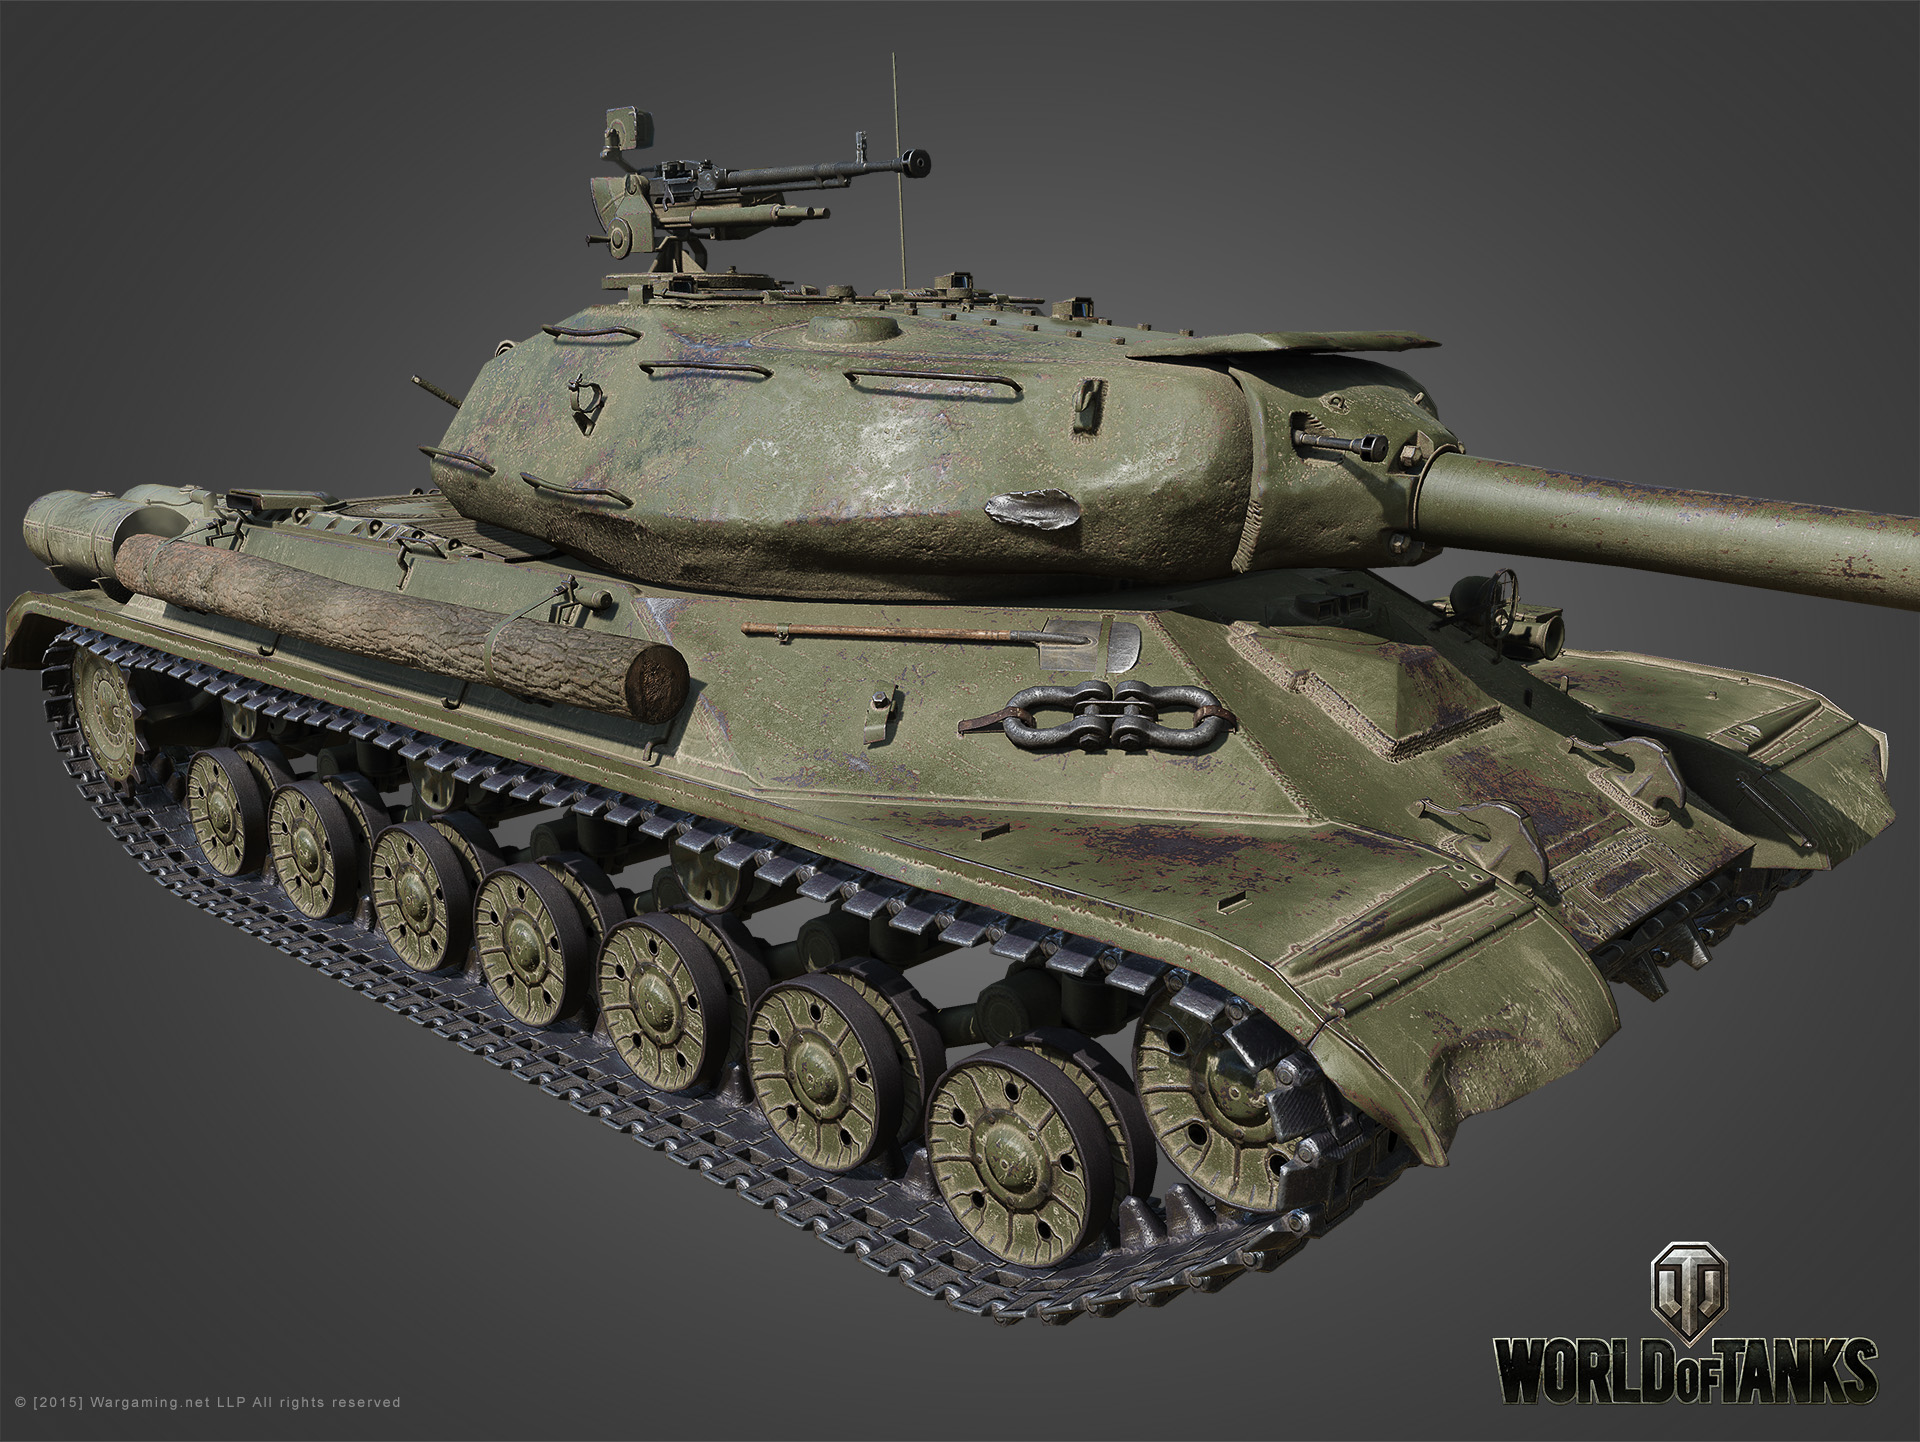 Coming Soon More Hd Tank Models General News World Of Tanks